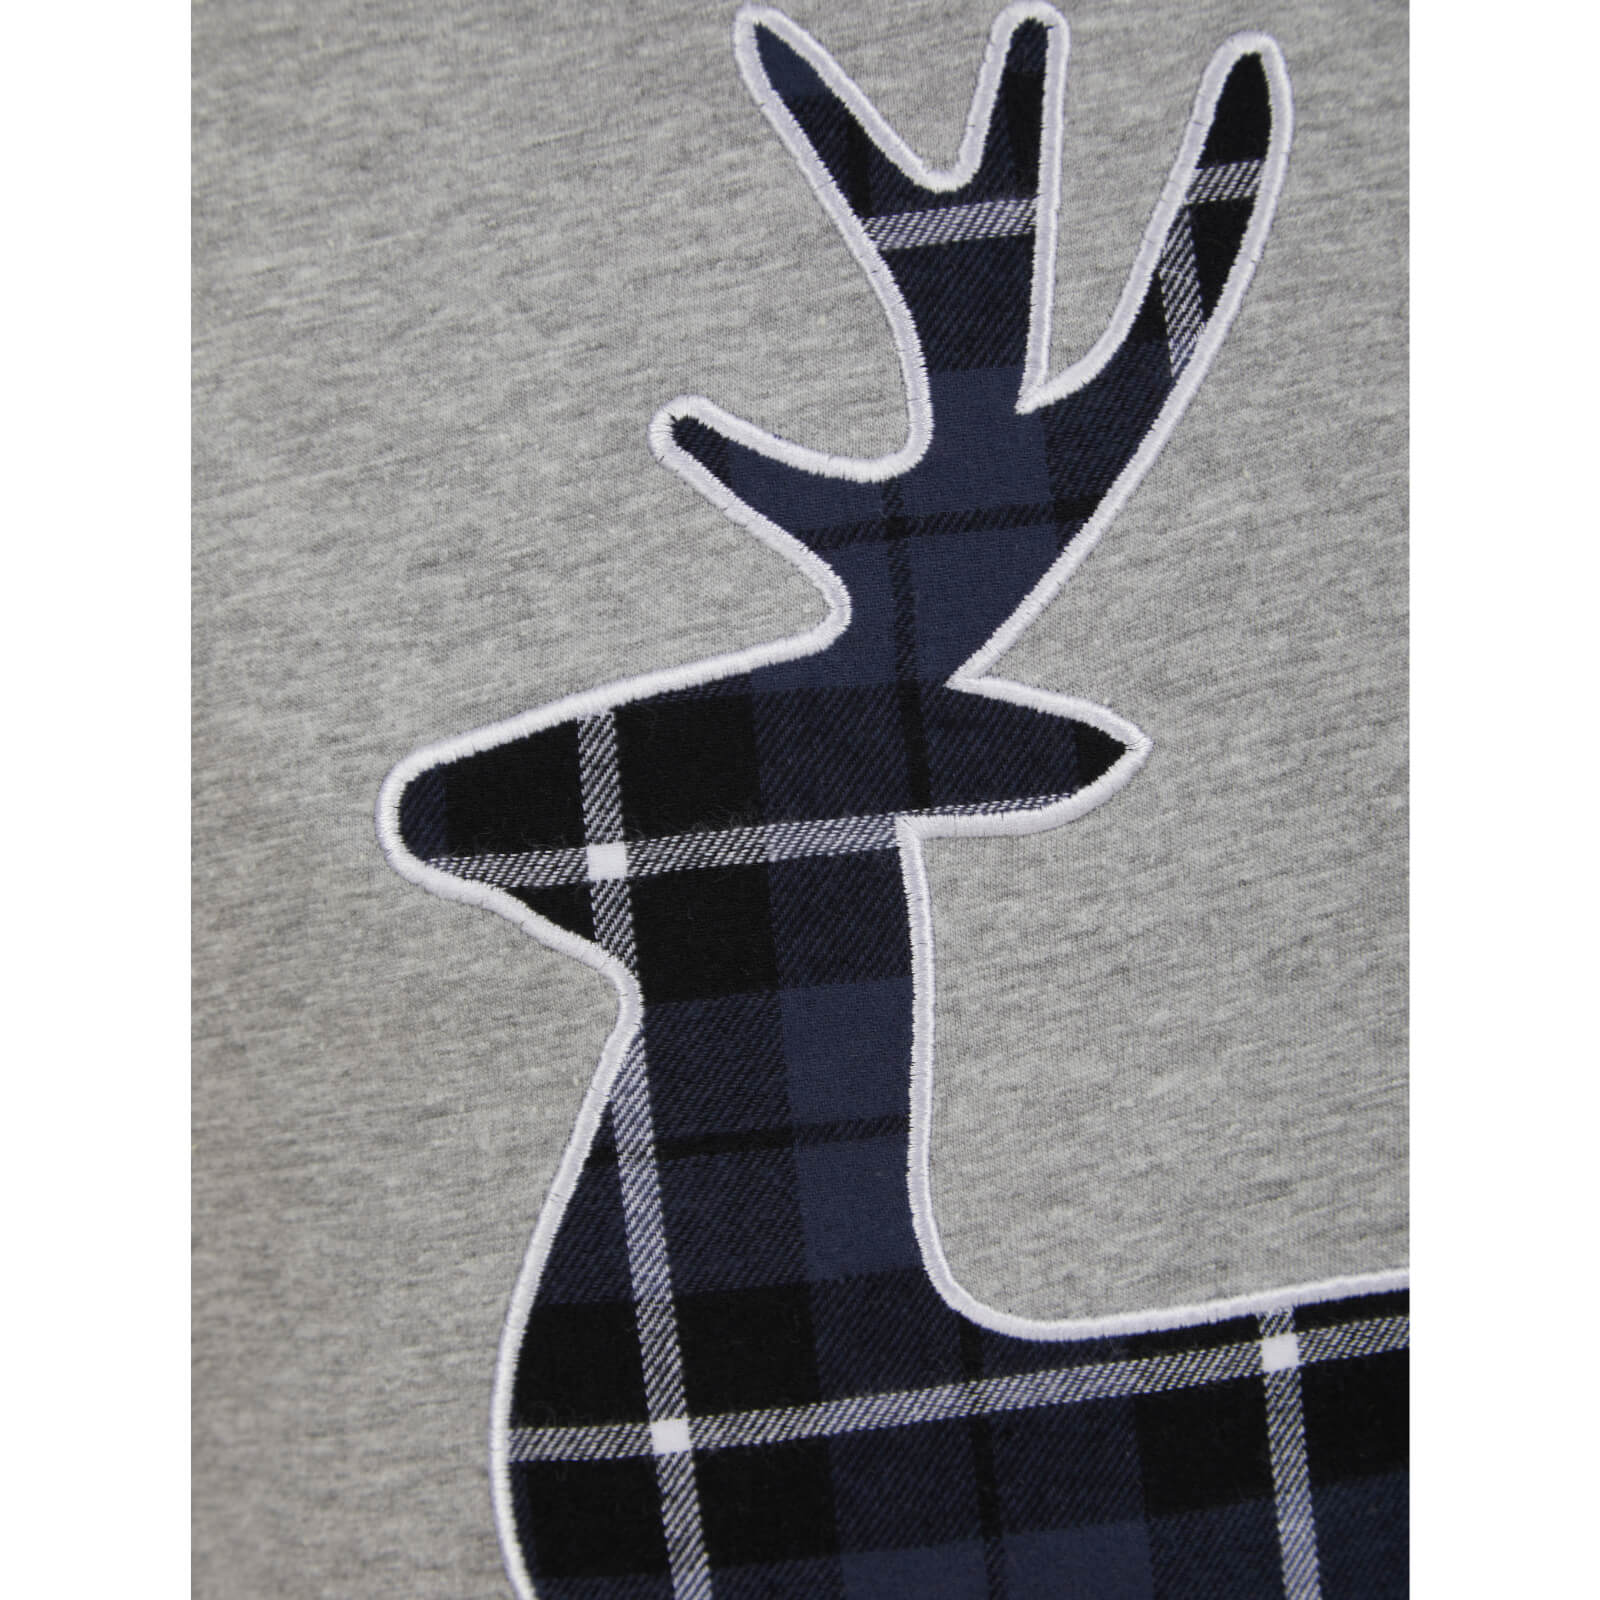 Mr Crimbo Mens Christmas Pyjama Set Reindeer/Stag Check Bottoms - MrCrimbo.co.uk -SRG1Q17454_F - Grey/Navy -Black